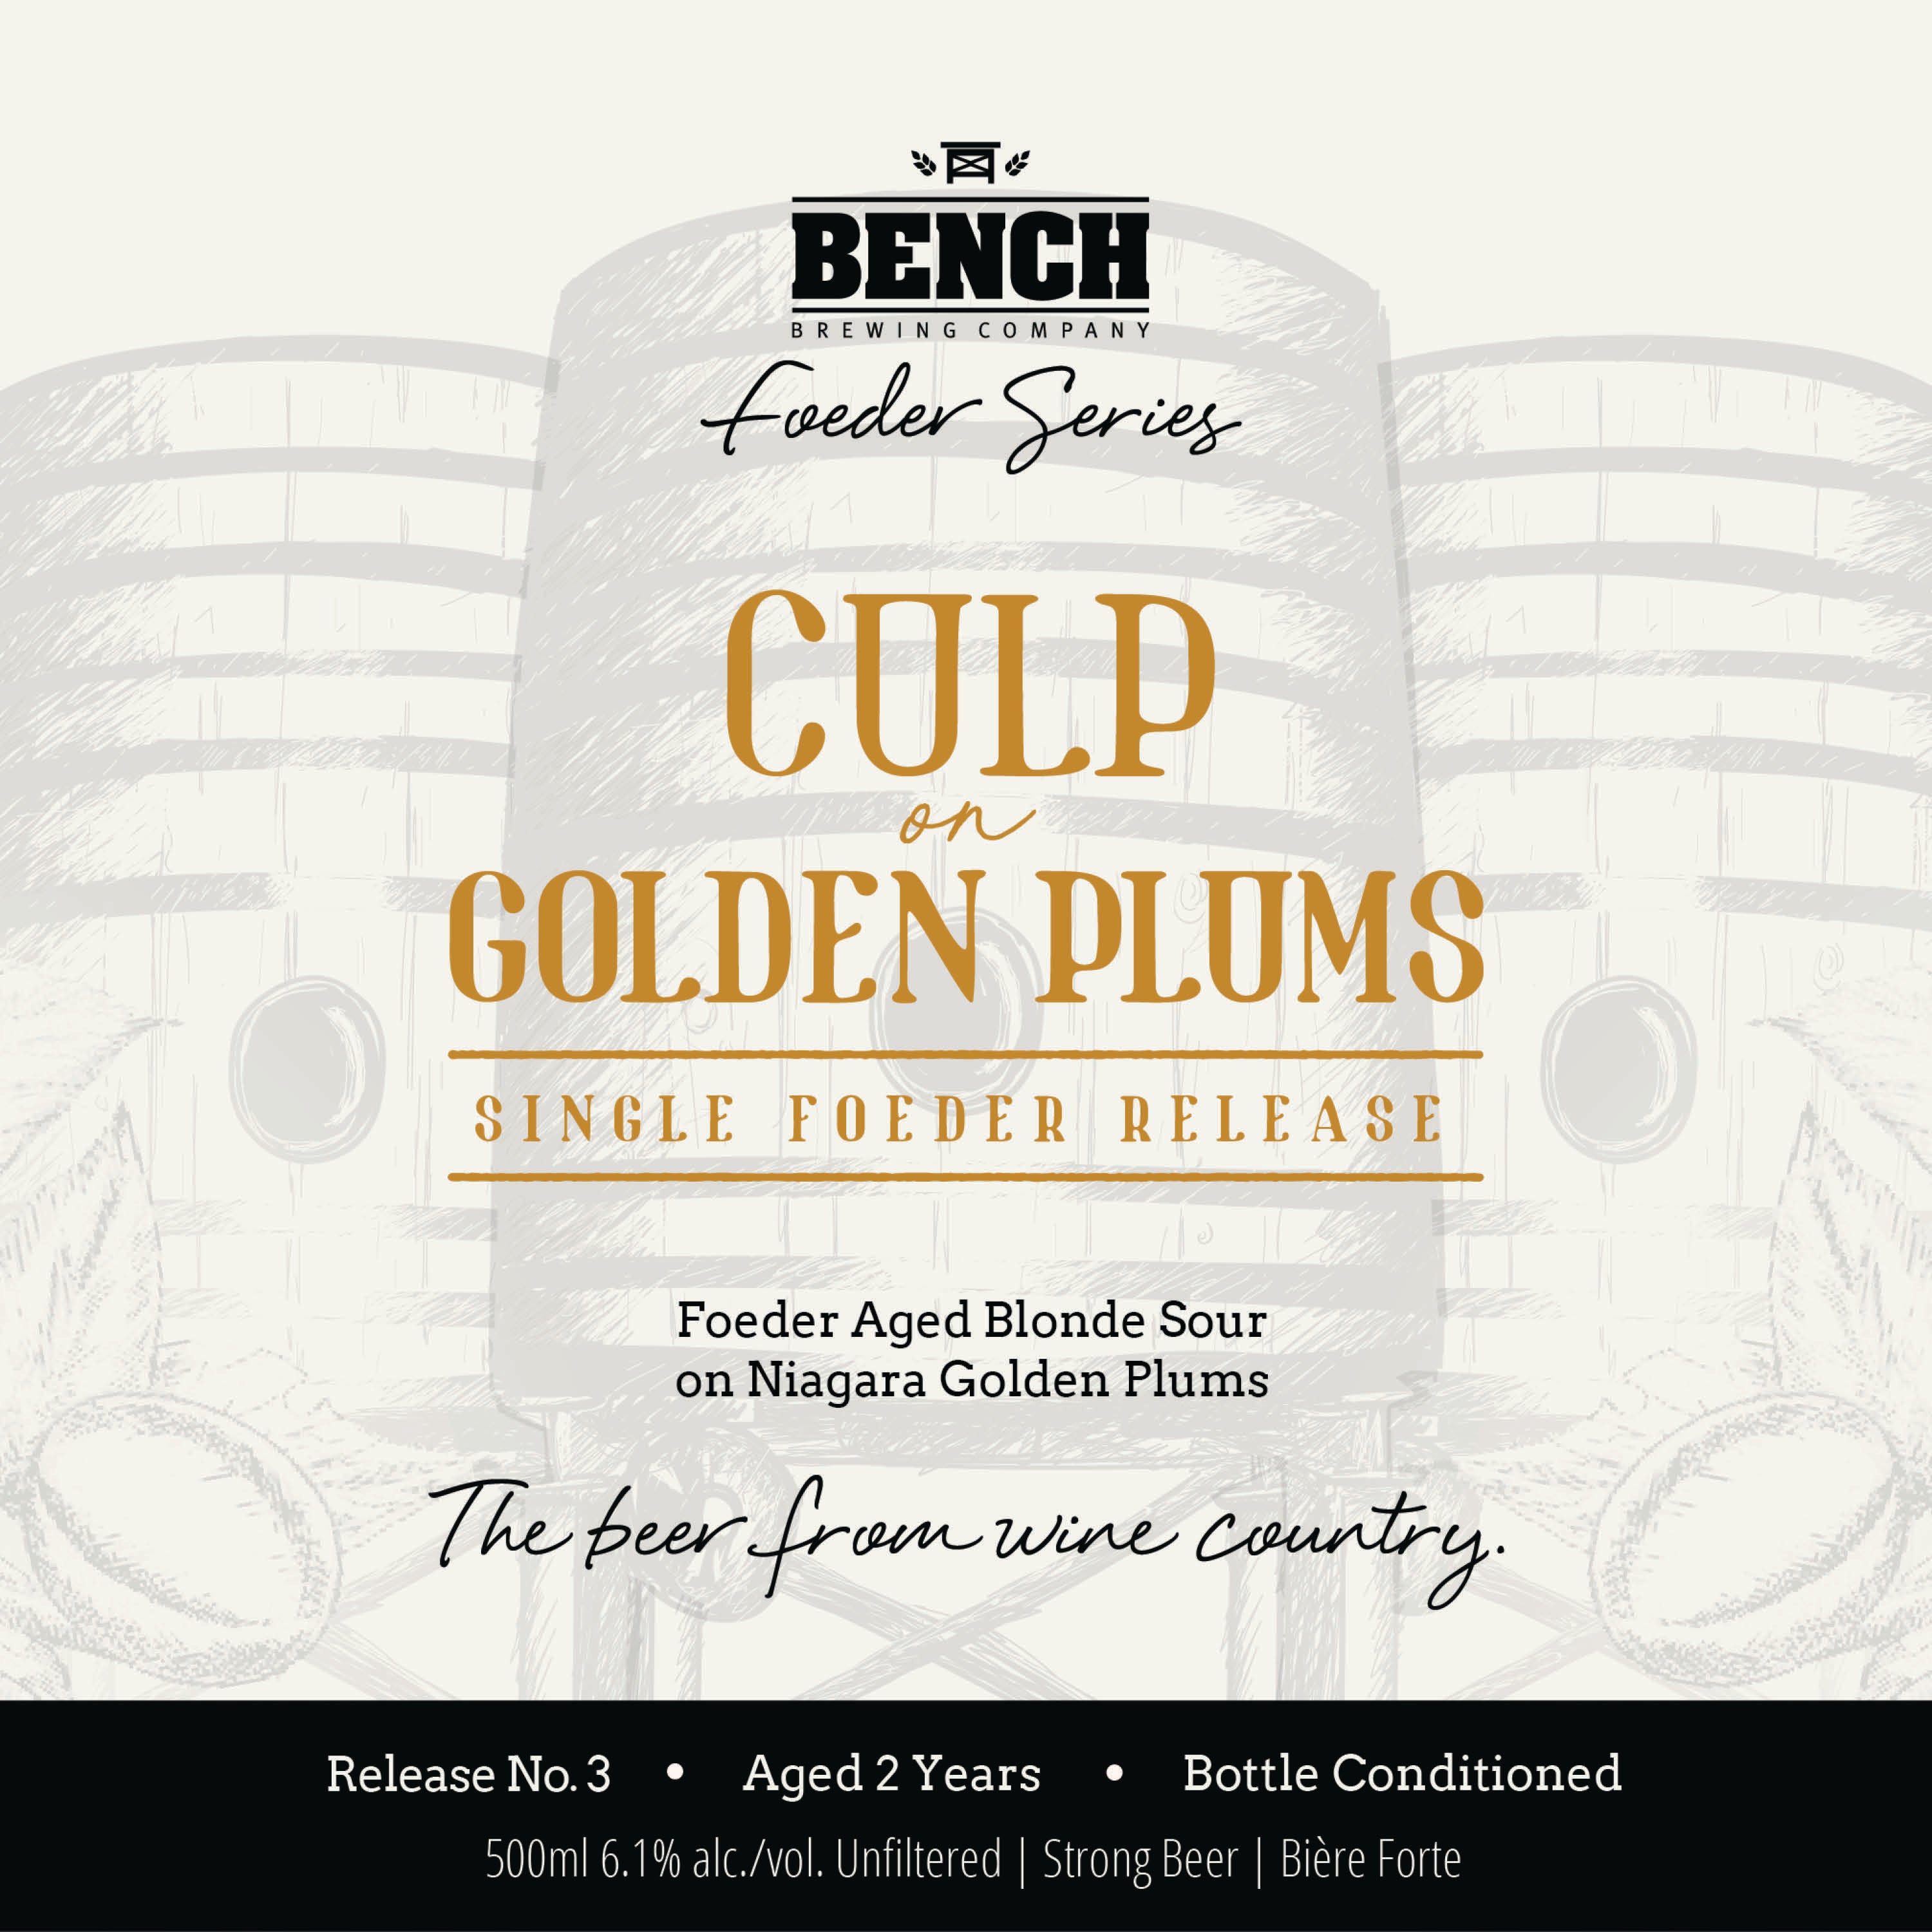 Culp on Golden Plums - Single Foeder Release